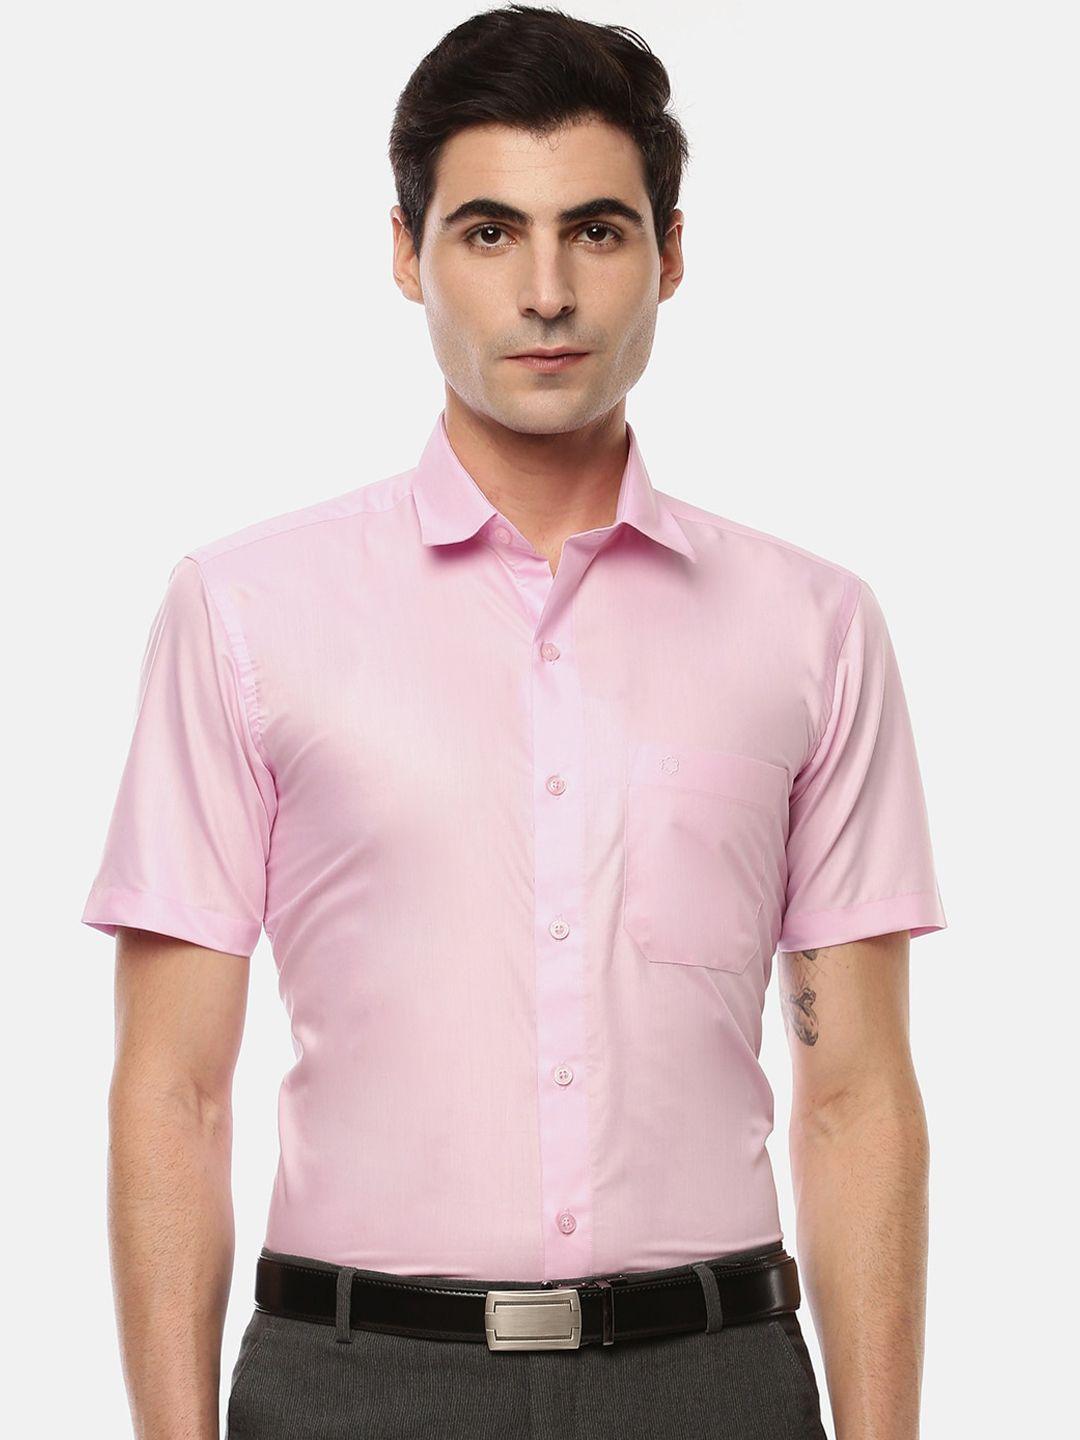 jansons men pink regular fit solid formal shirt